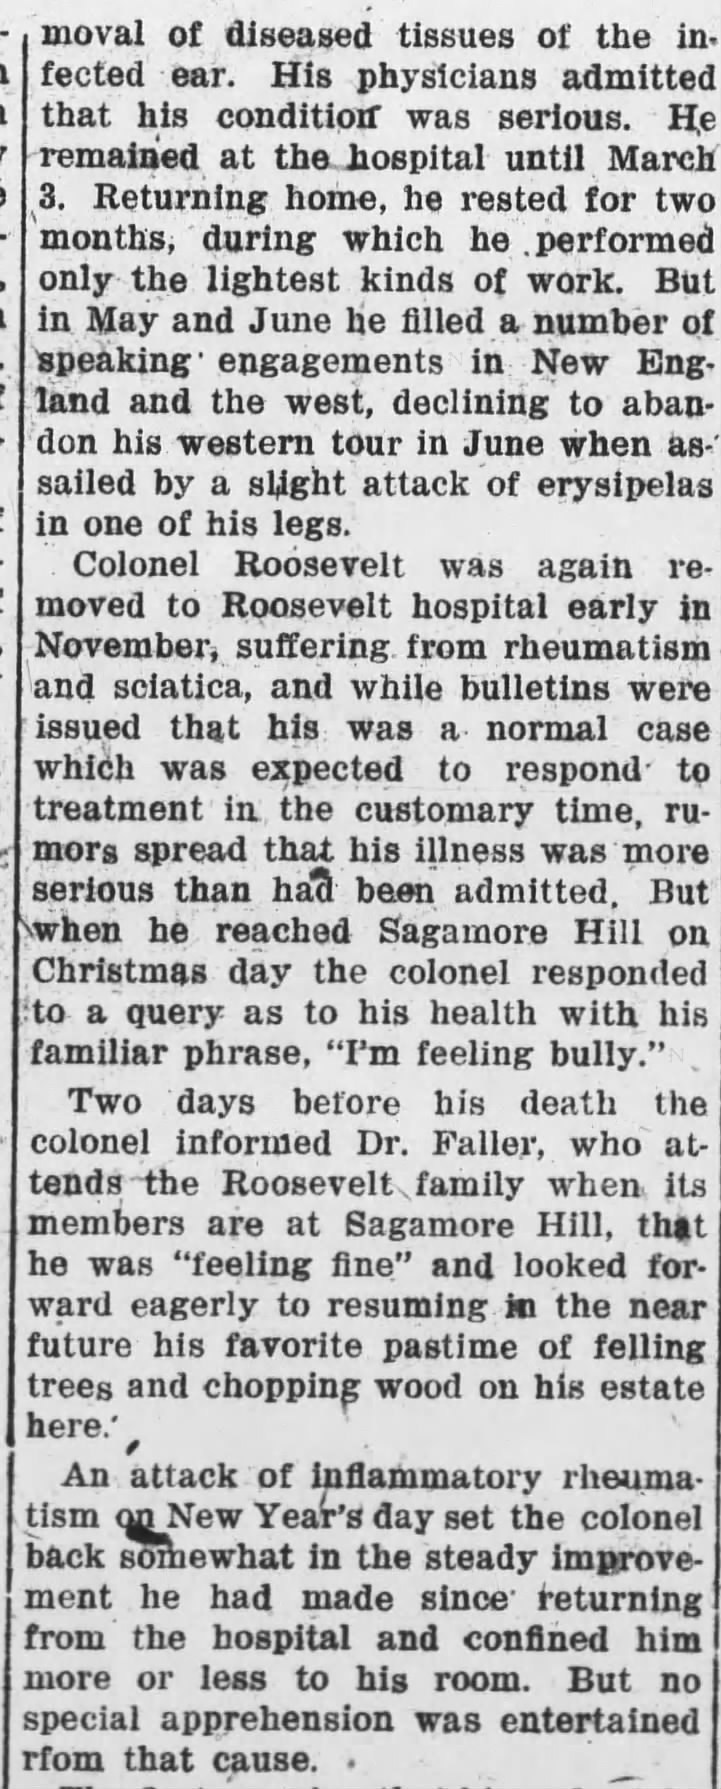 T. Roosevelt's declining health